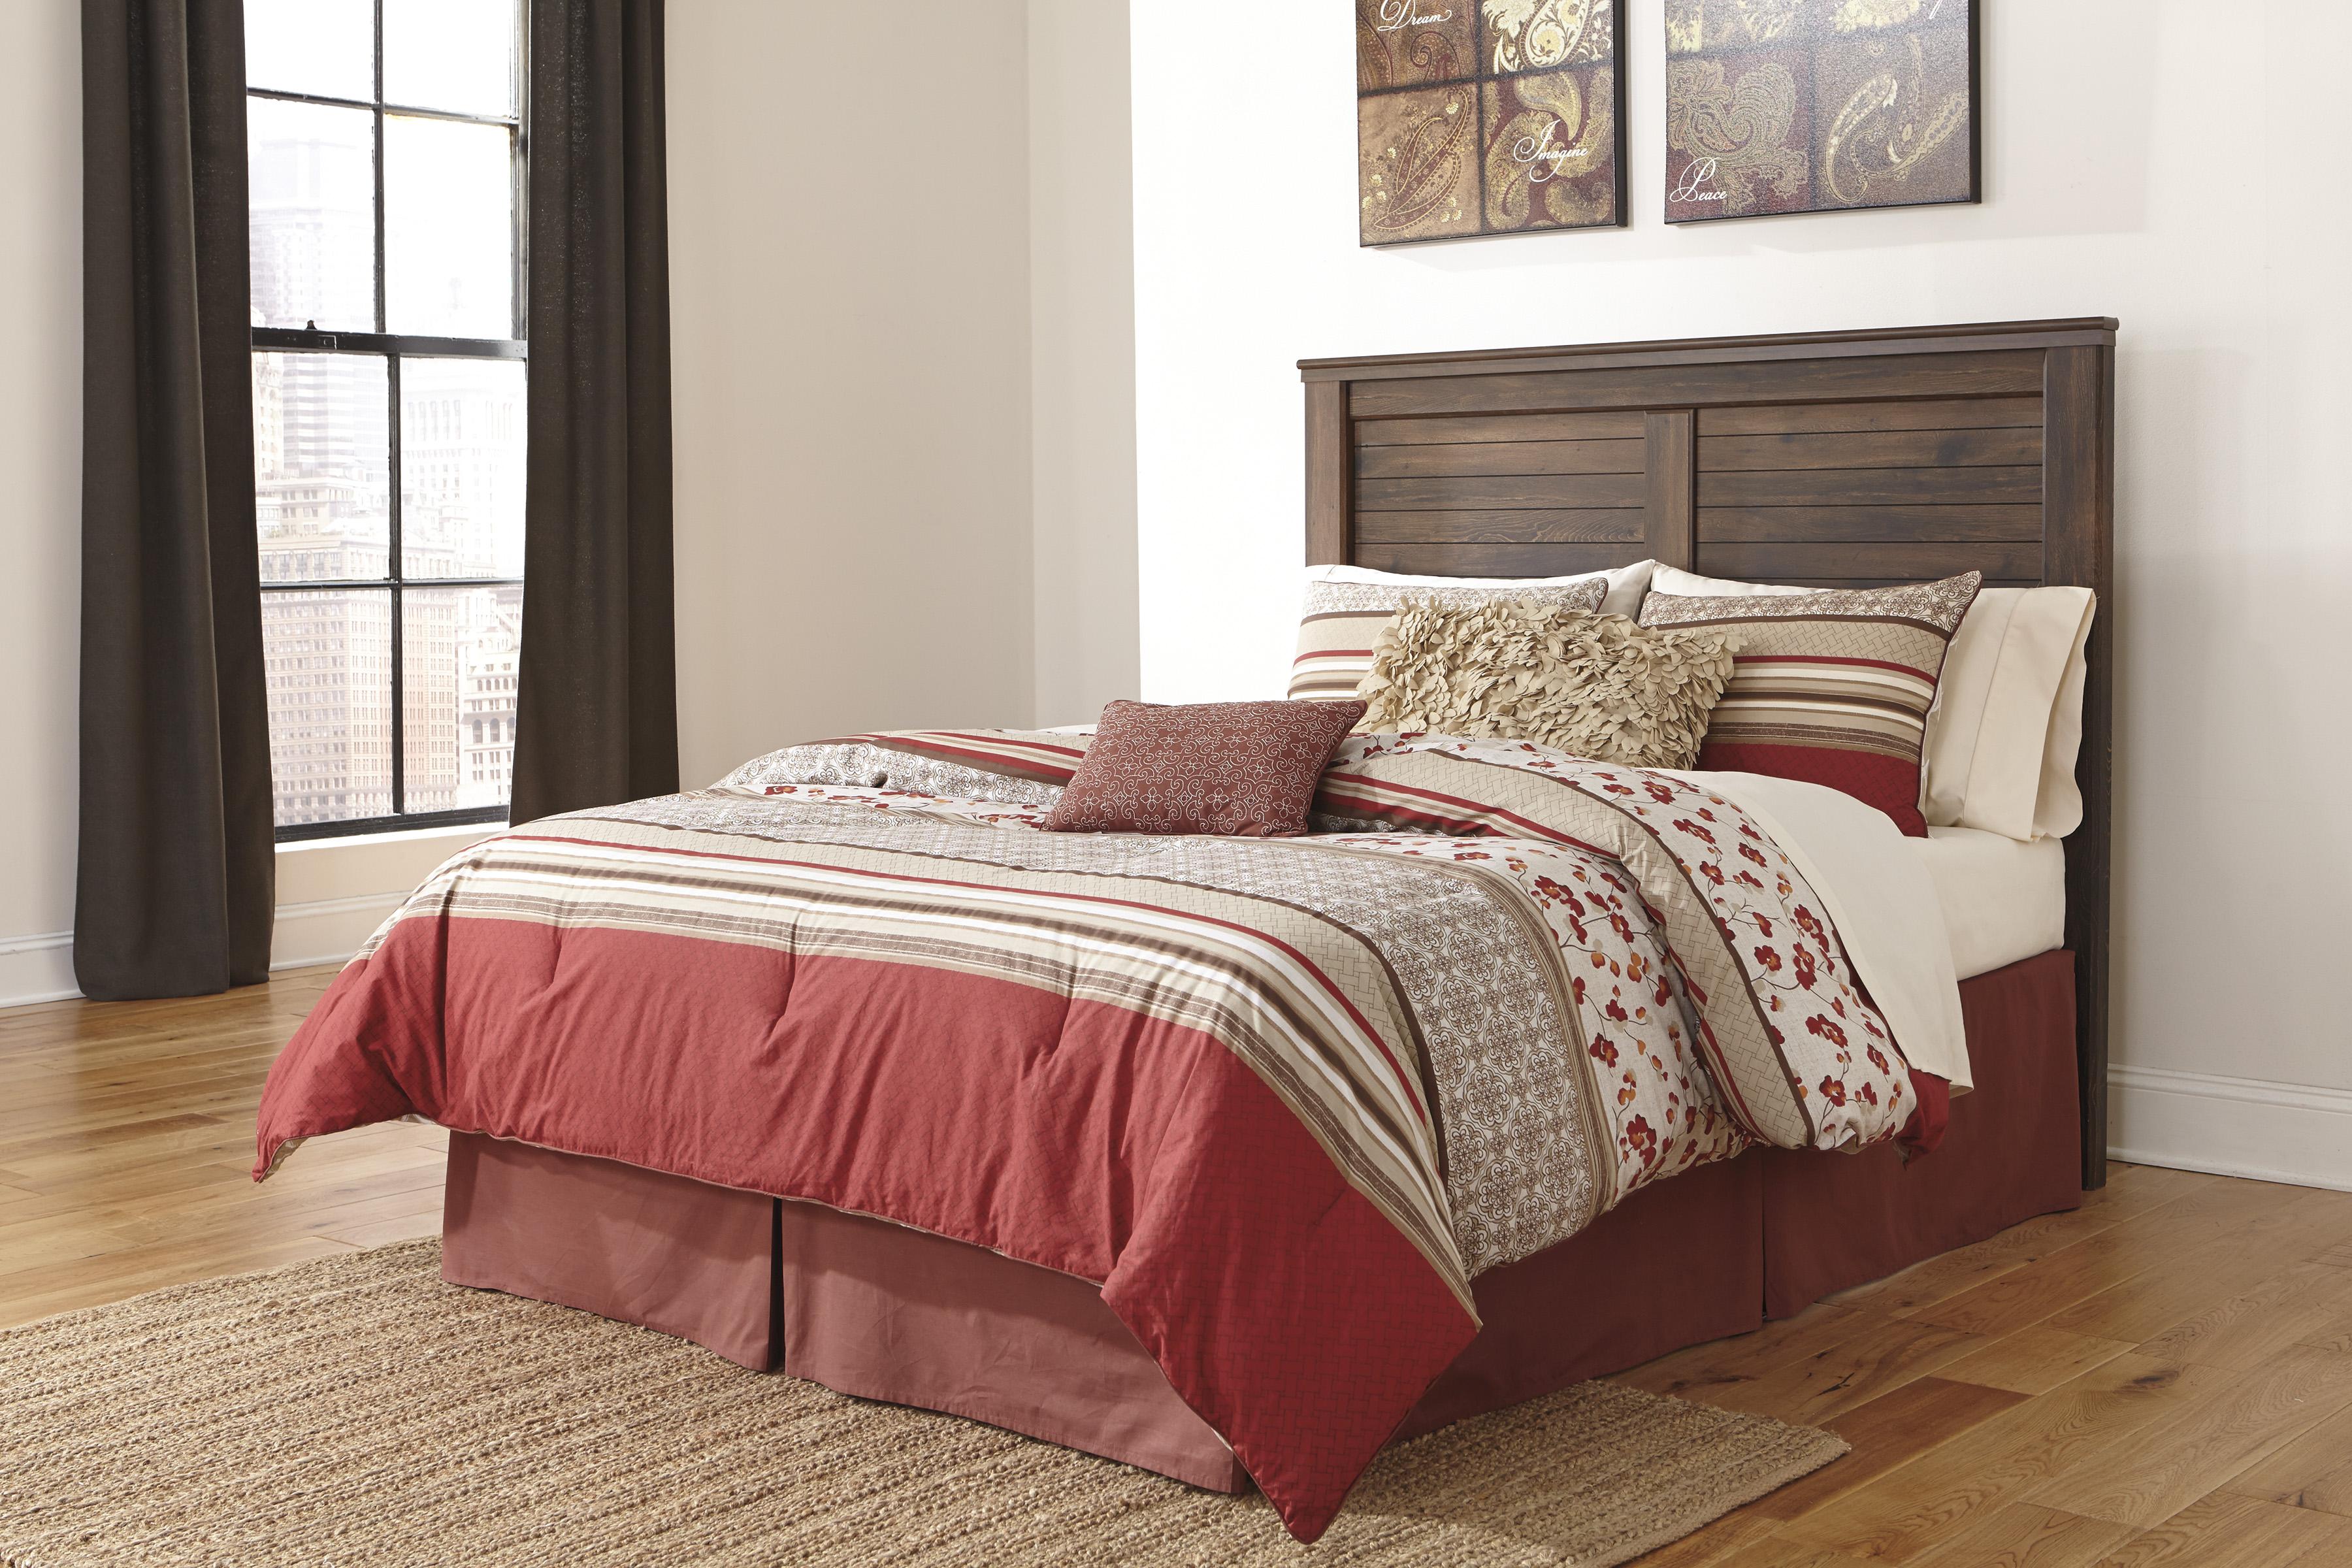 Ashley Quinden B246 Queen Size Panel Bedroom Set 5pcs In Dark Brown Buy Online On Ny Furniture